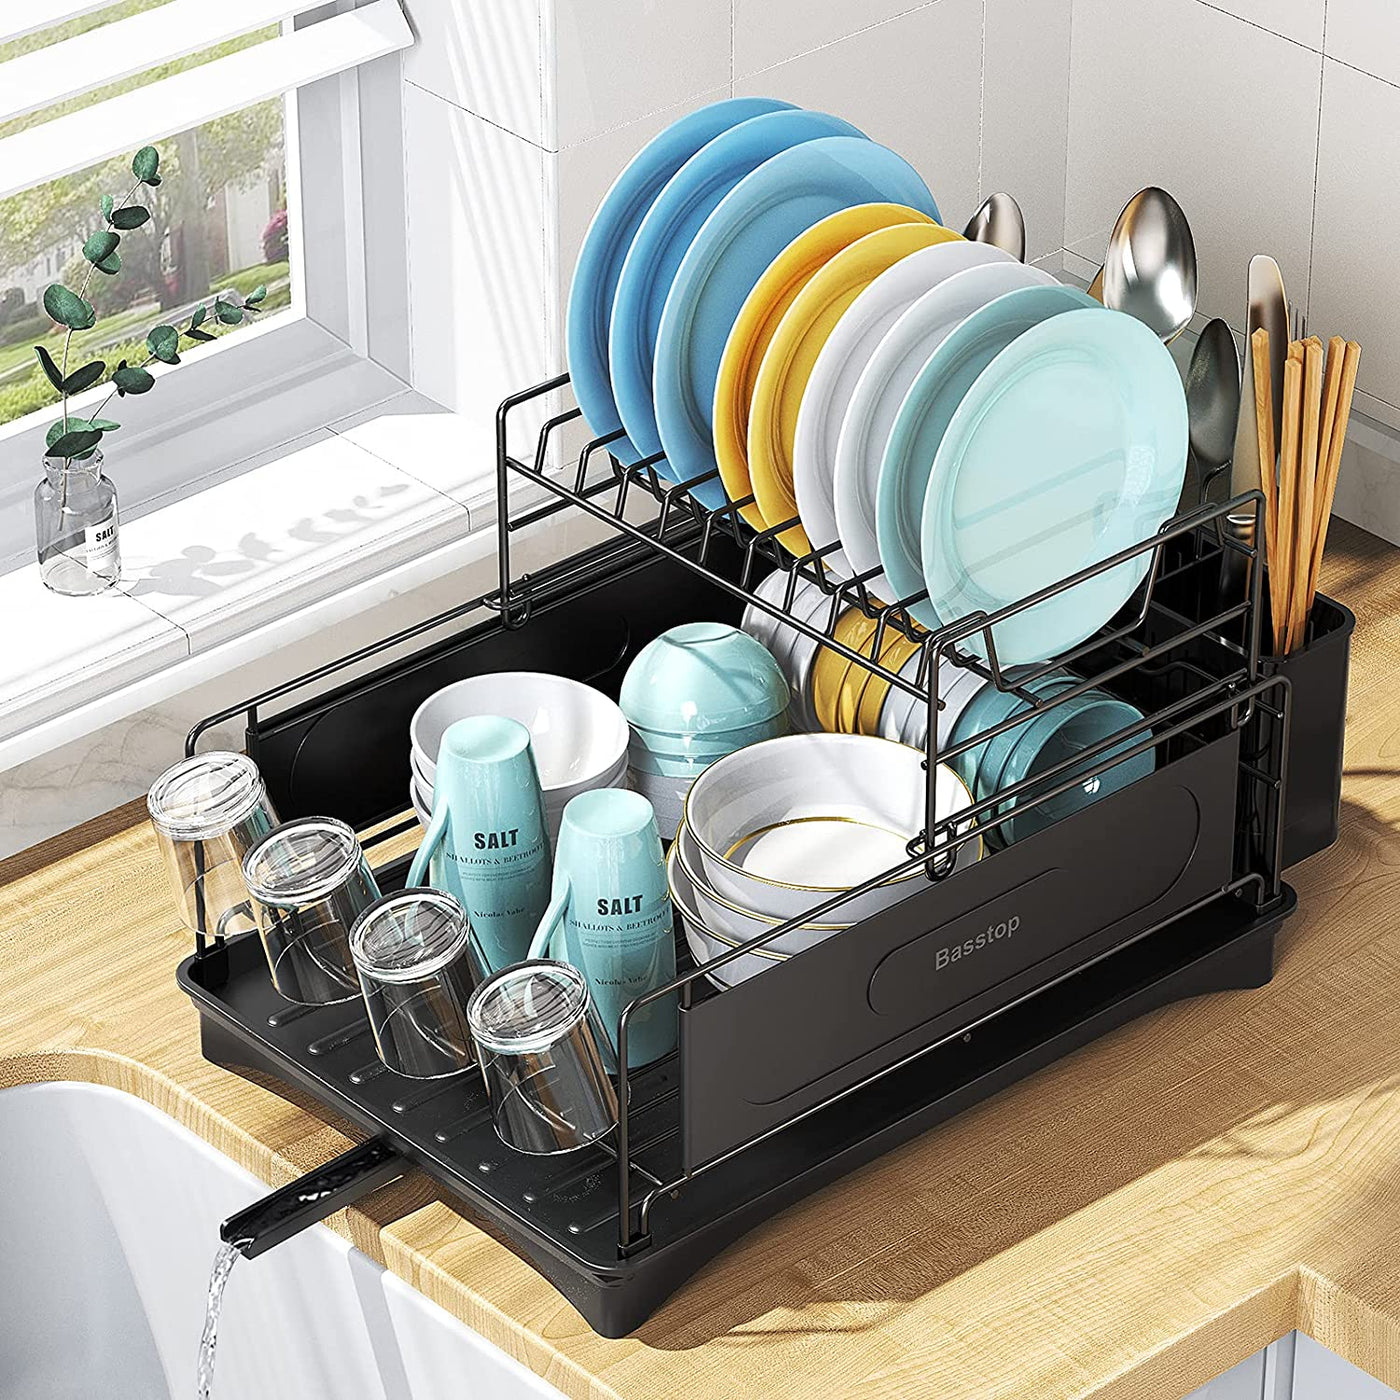 Dish Drying Rack Over Sink, Basstop Length Adjustable 